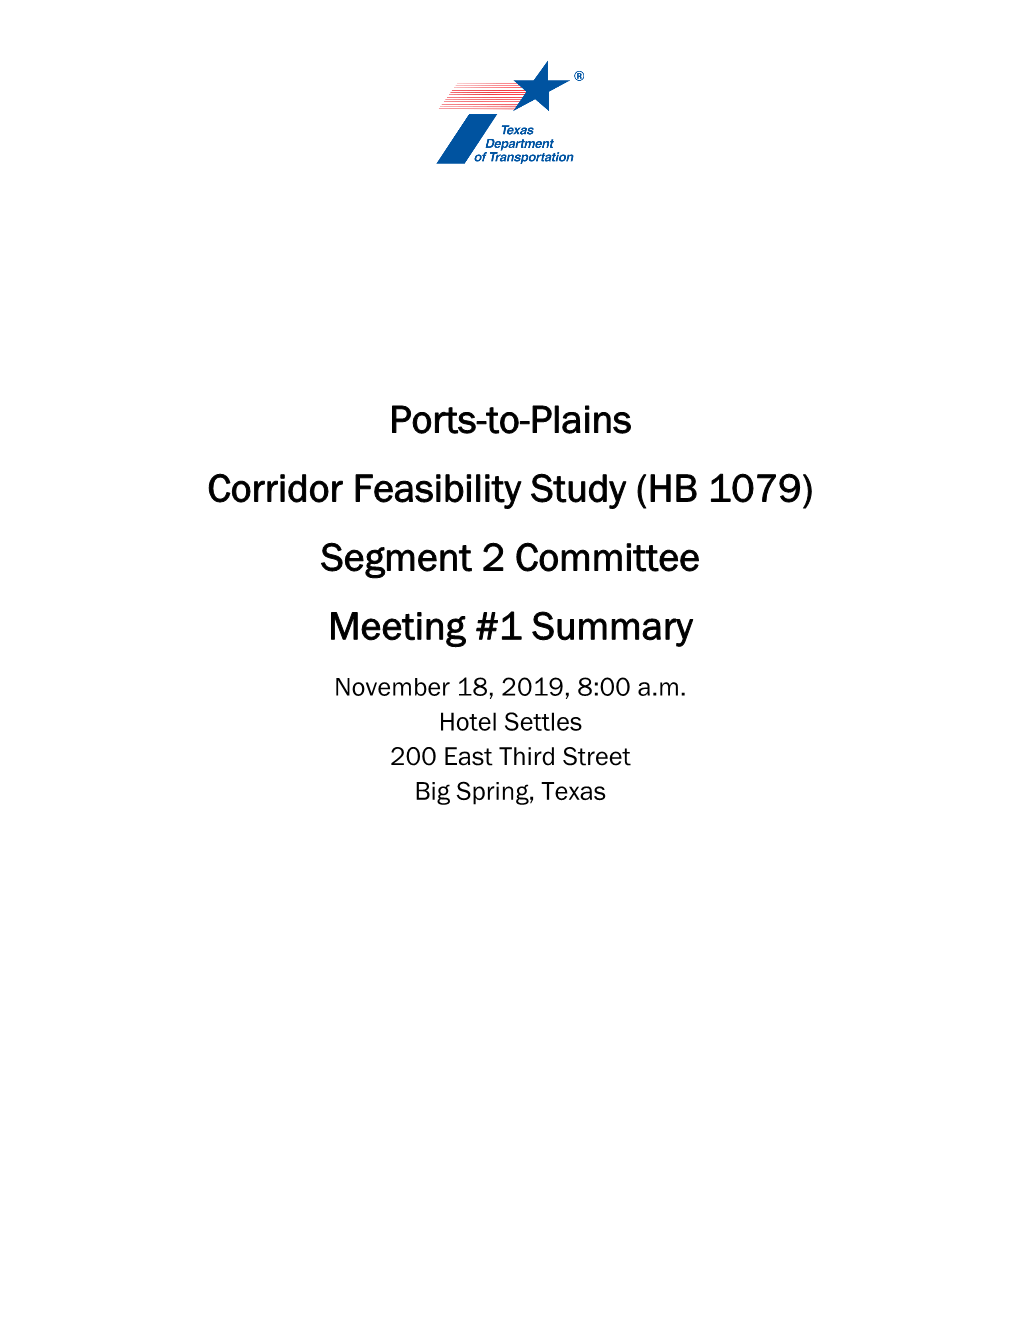 Ports-To-Plains Corridor Feasibility Study (HB 1079) Segment 2 Committee Meeting #1 Summary November 18, 2019, 8:00 A.M